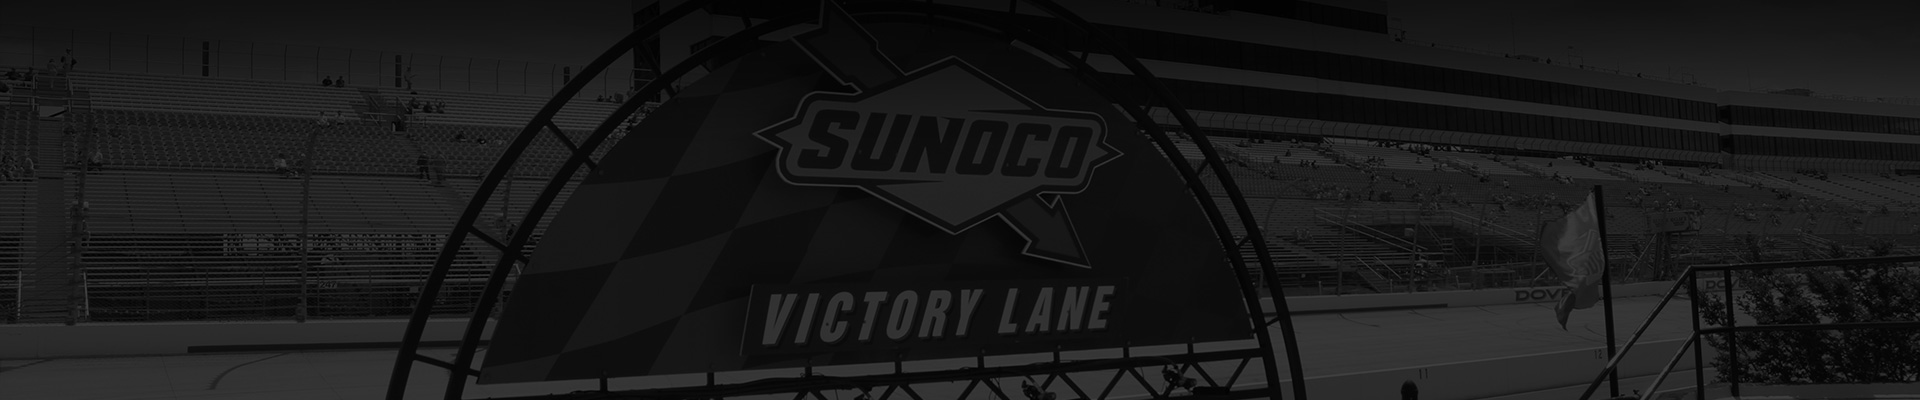 Sunoco Victory Lane